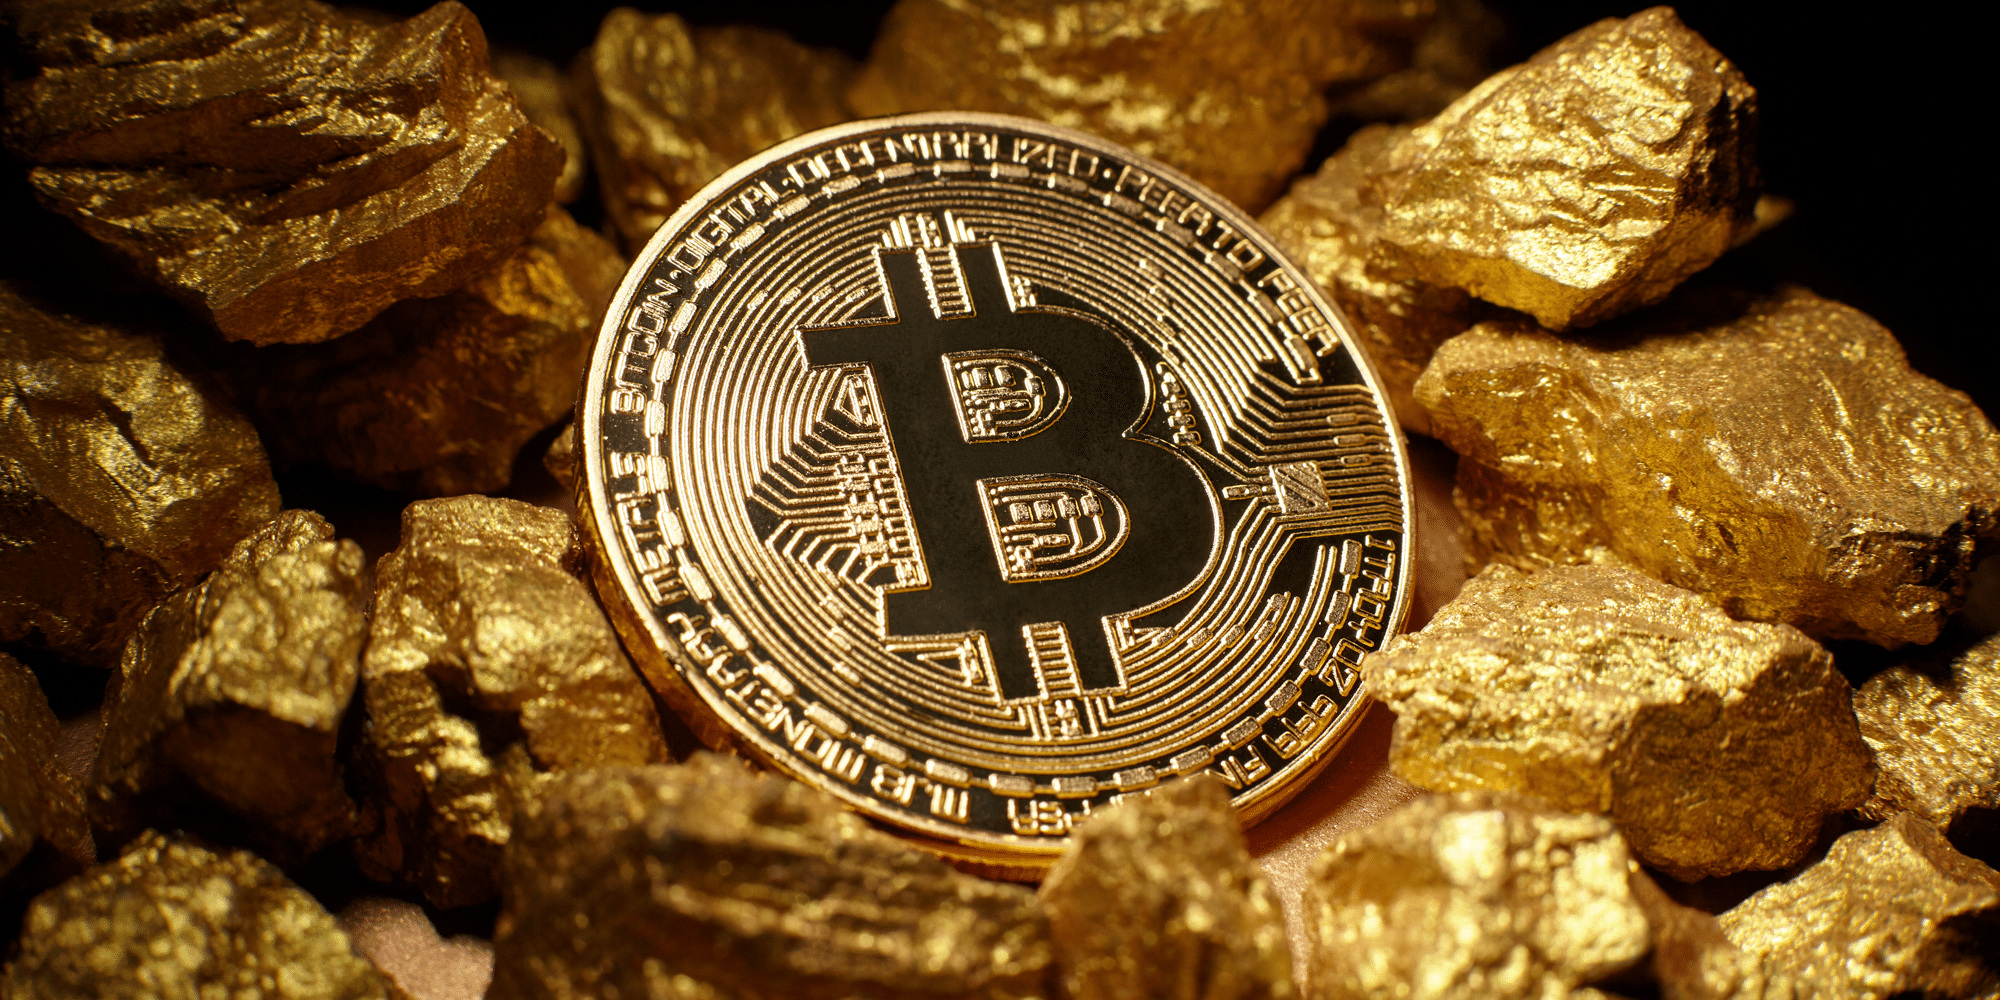 Robert Kiyosaki prefers Gold over Bitcoin